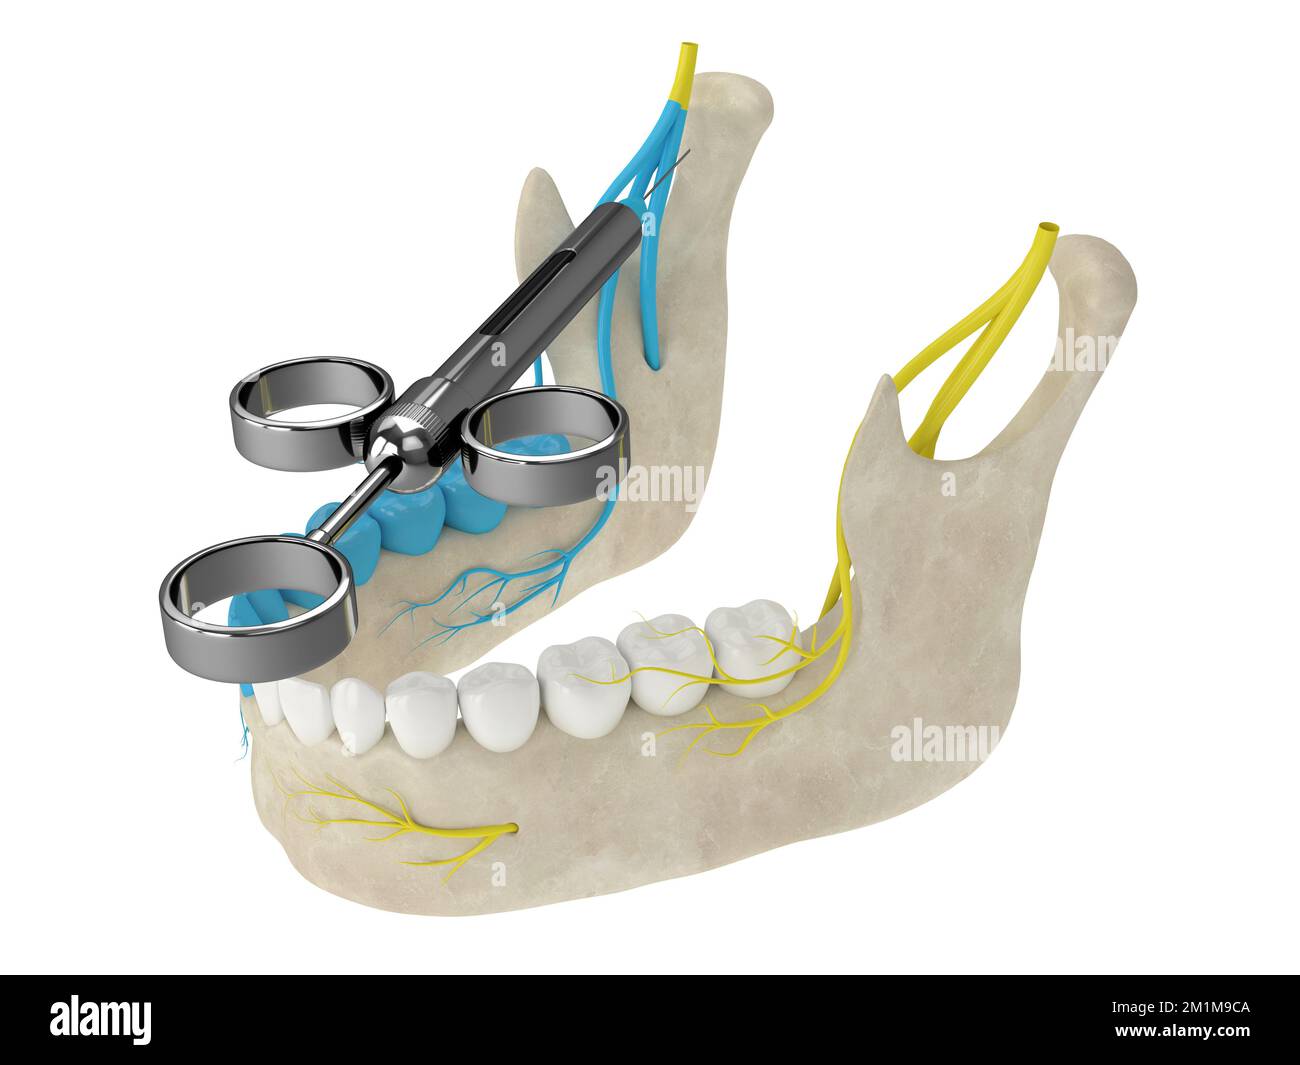 Mandibular nerve hi-res stock photography and images - Alamy